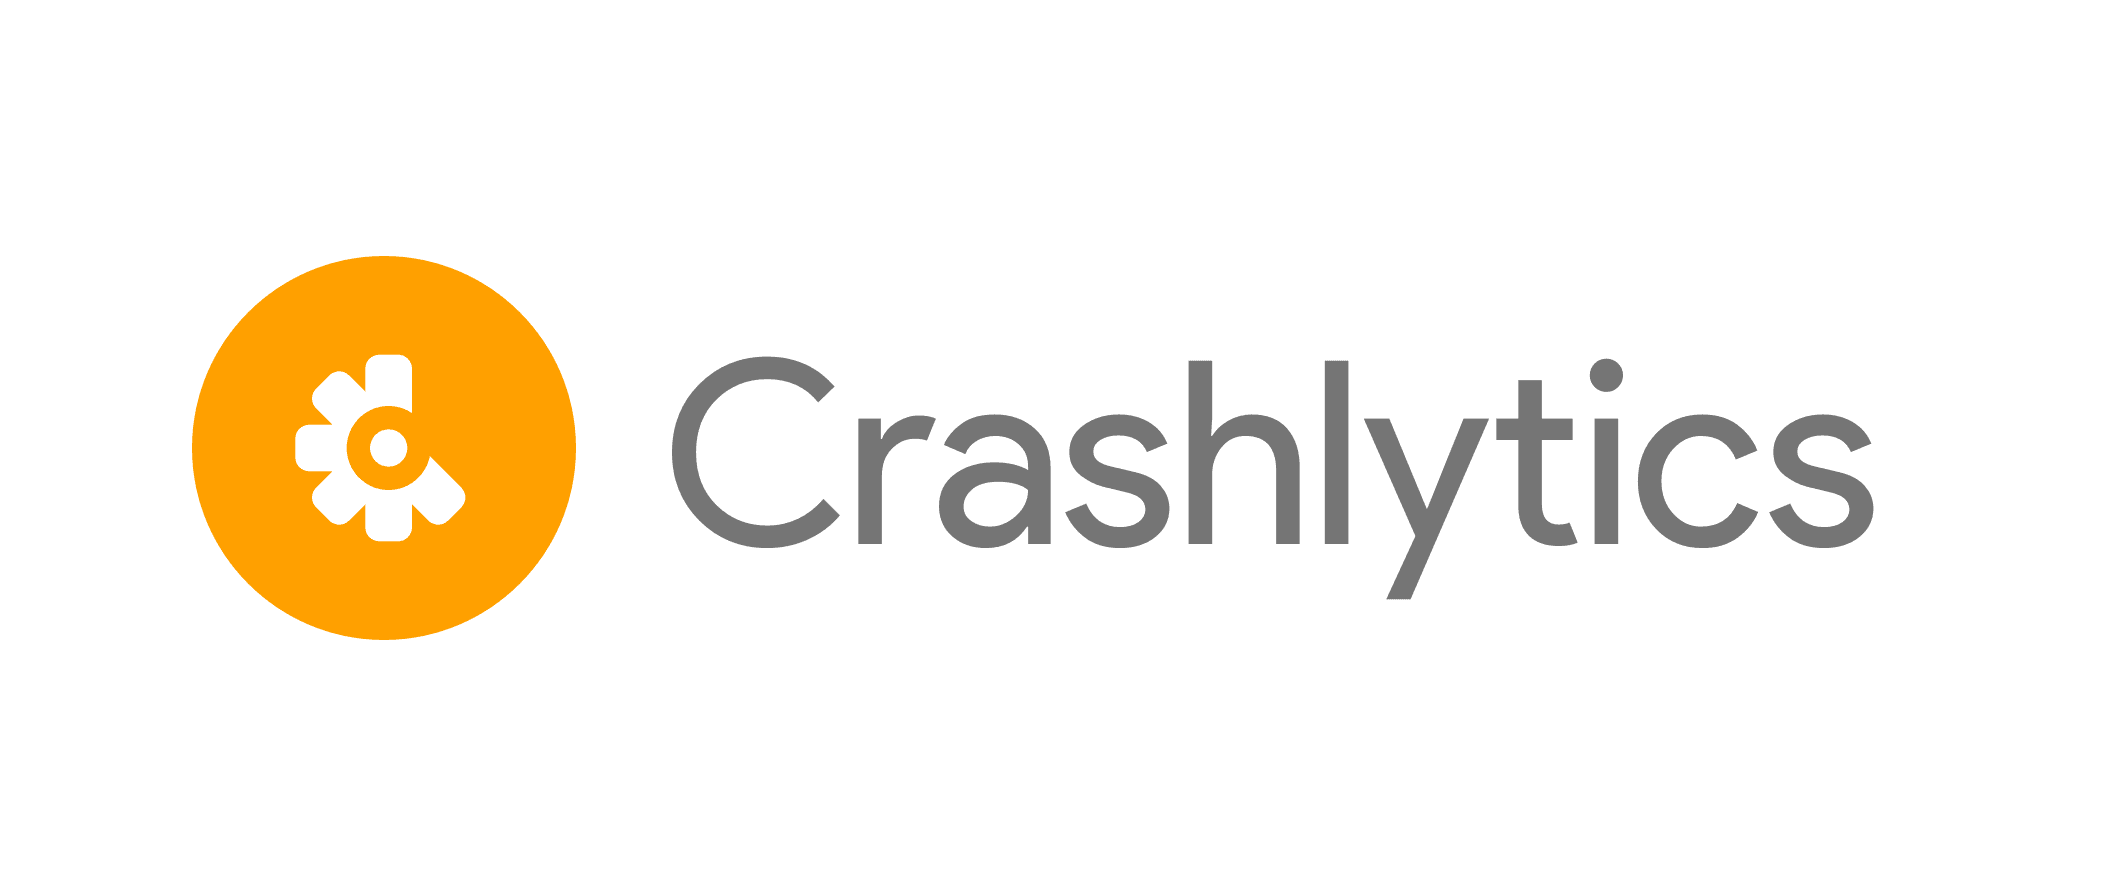 Firebase Crashlytics.png